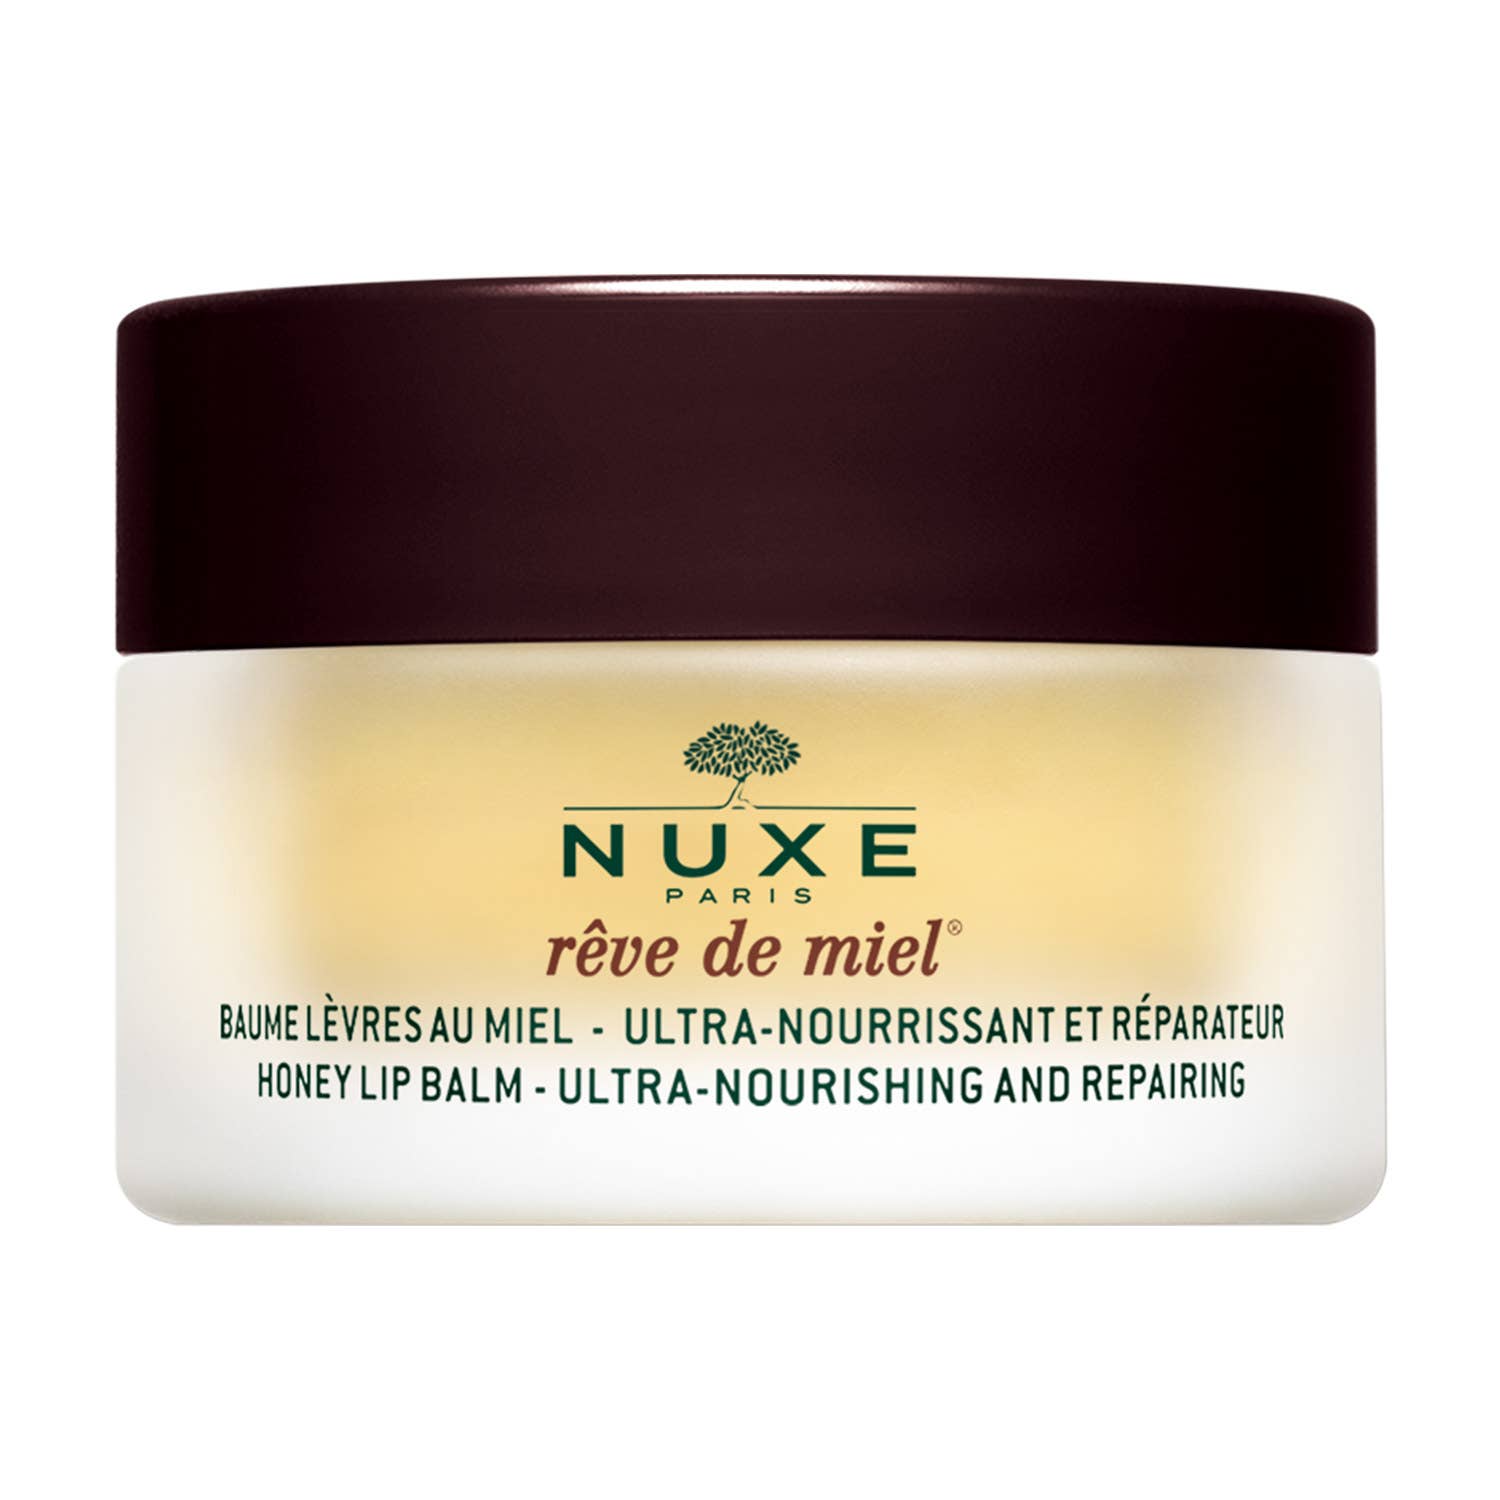 Nuxe Reve de Miel Nourishing Scrub -175ml – The French Cosmetics Club